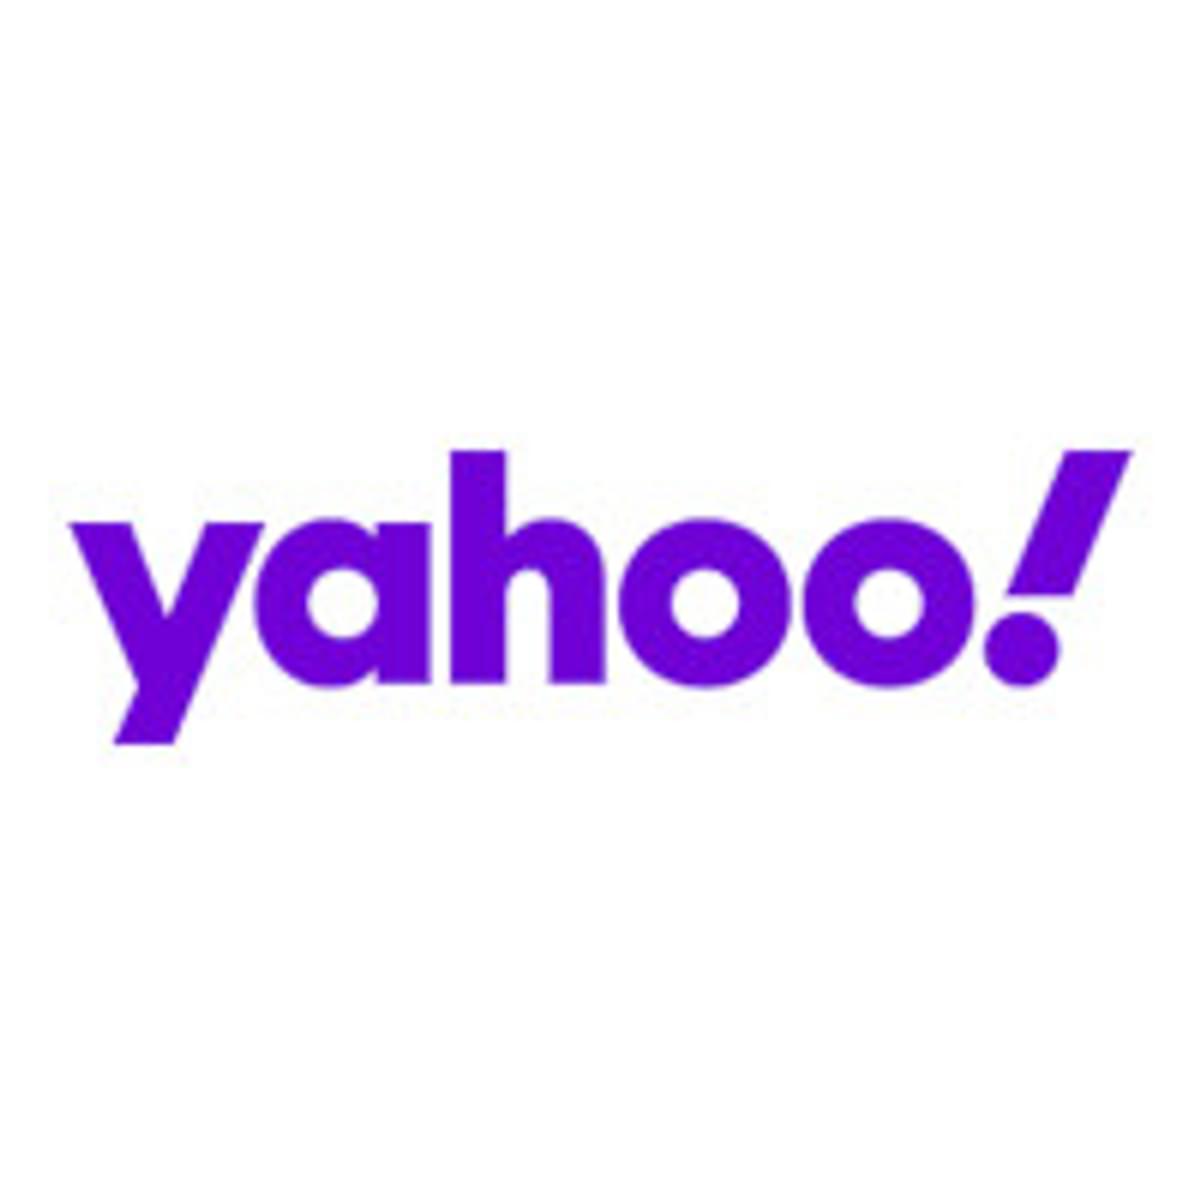 Yahoo gaat na verkoop weer Yahoo heten image